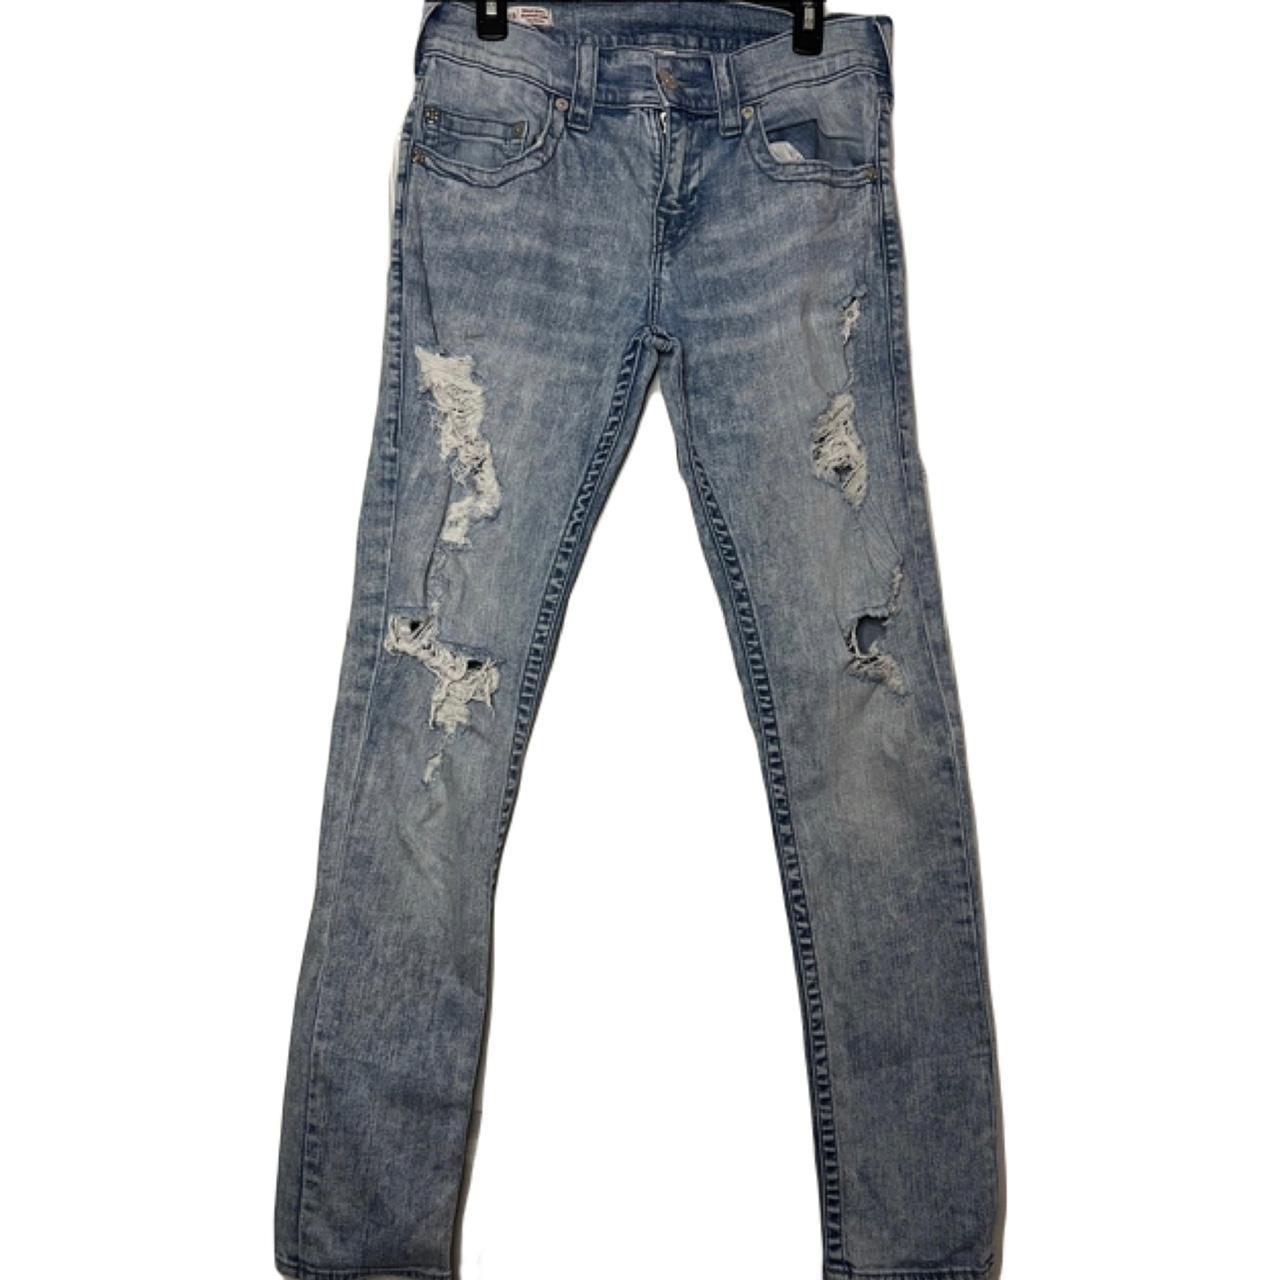 True Religion Rocco skinny jeans 💙 •mens size 30... - Depop